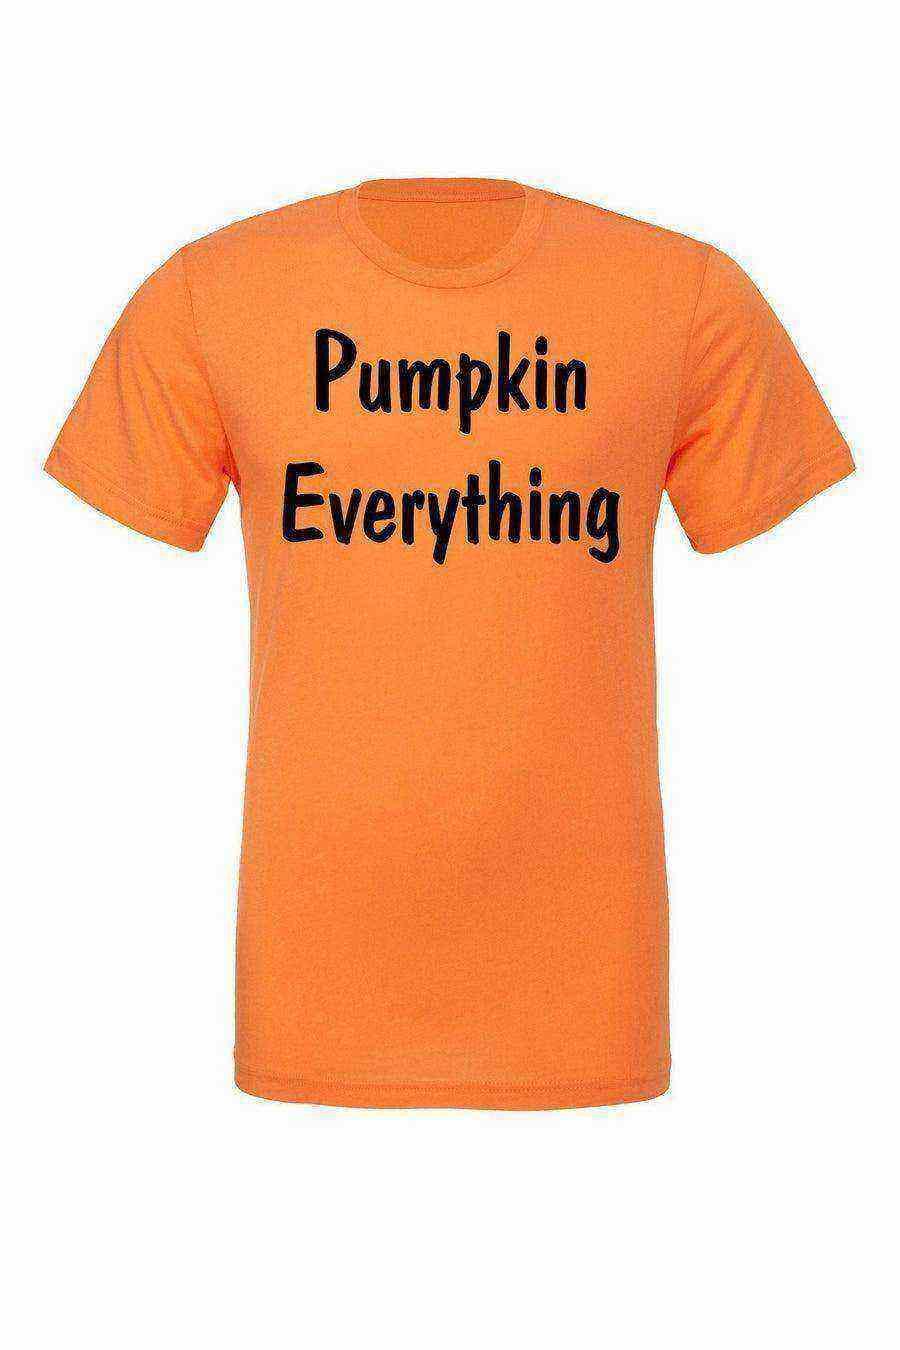 Pumpkin Everything Shirt | Fall Tee - Dylan's Tees